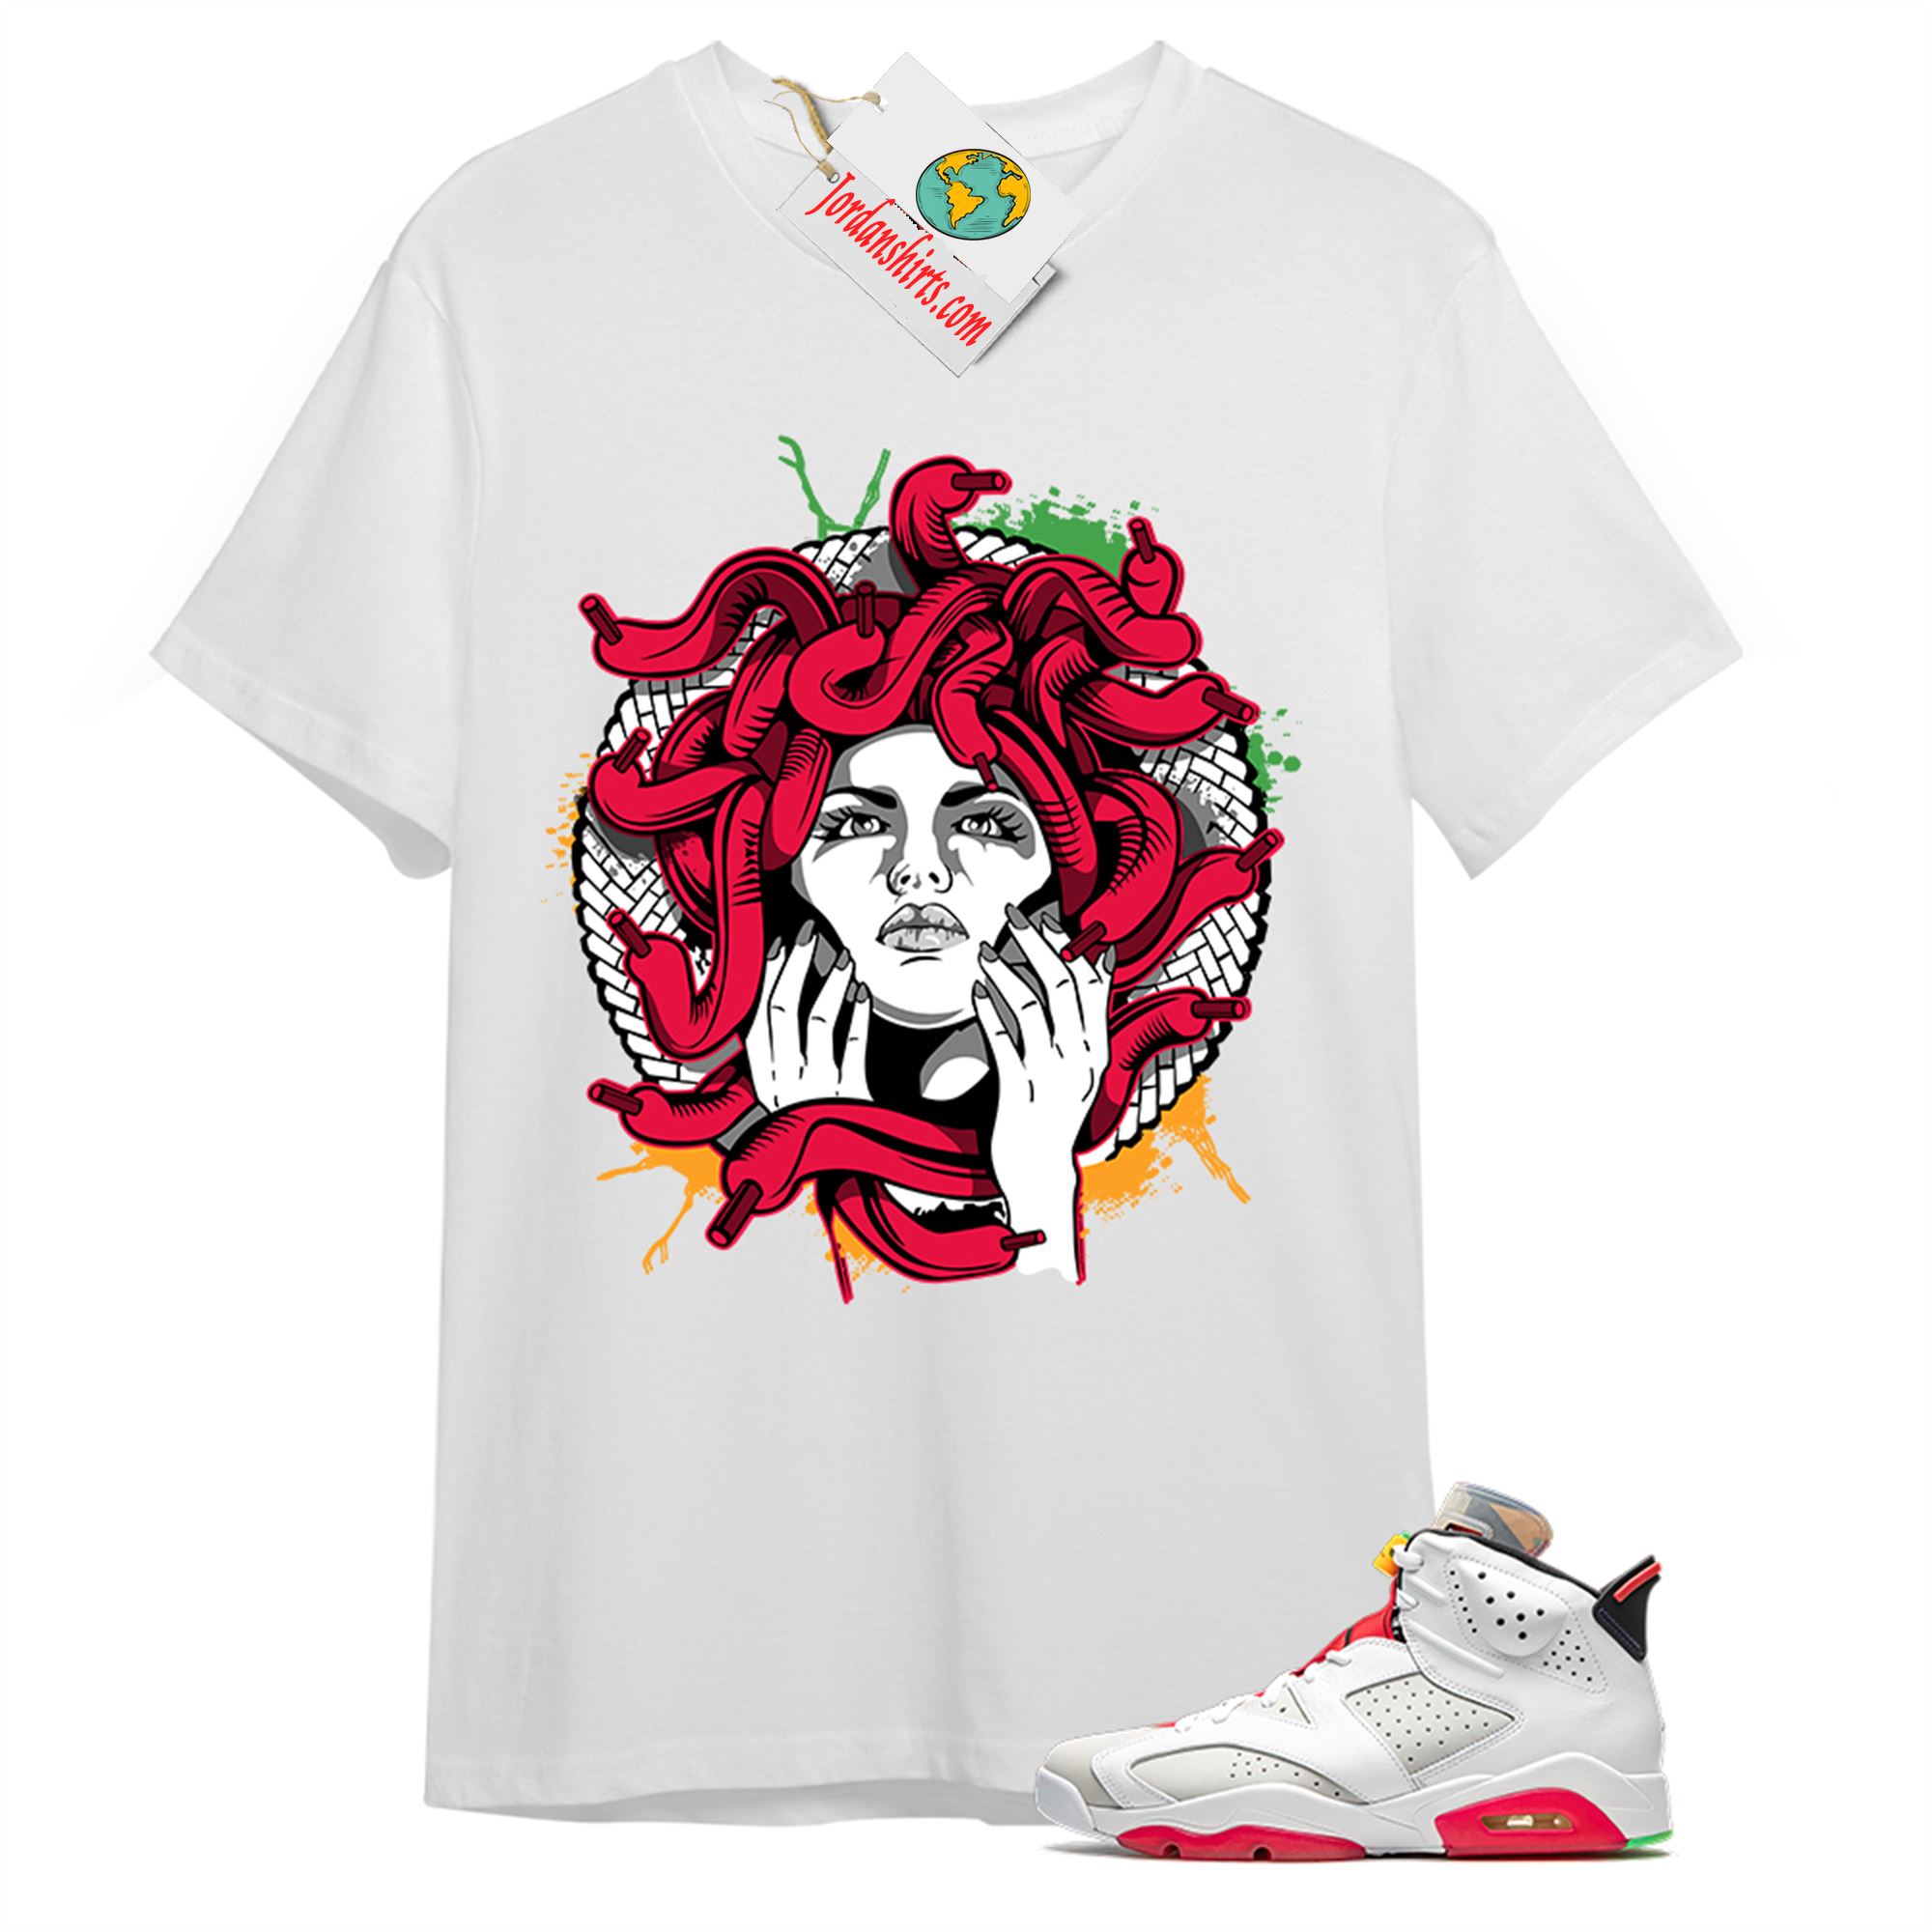 Jordan 6 Shirt, Medusa White T-shirt Air Jordan 6 Hare 6s Full Size Up To 5xl